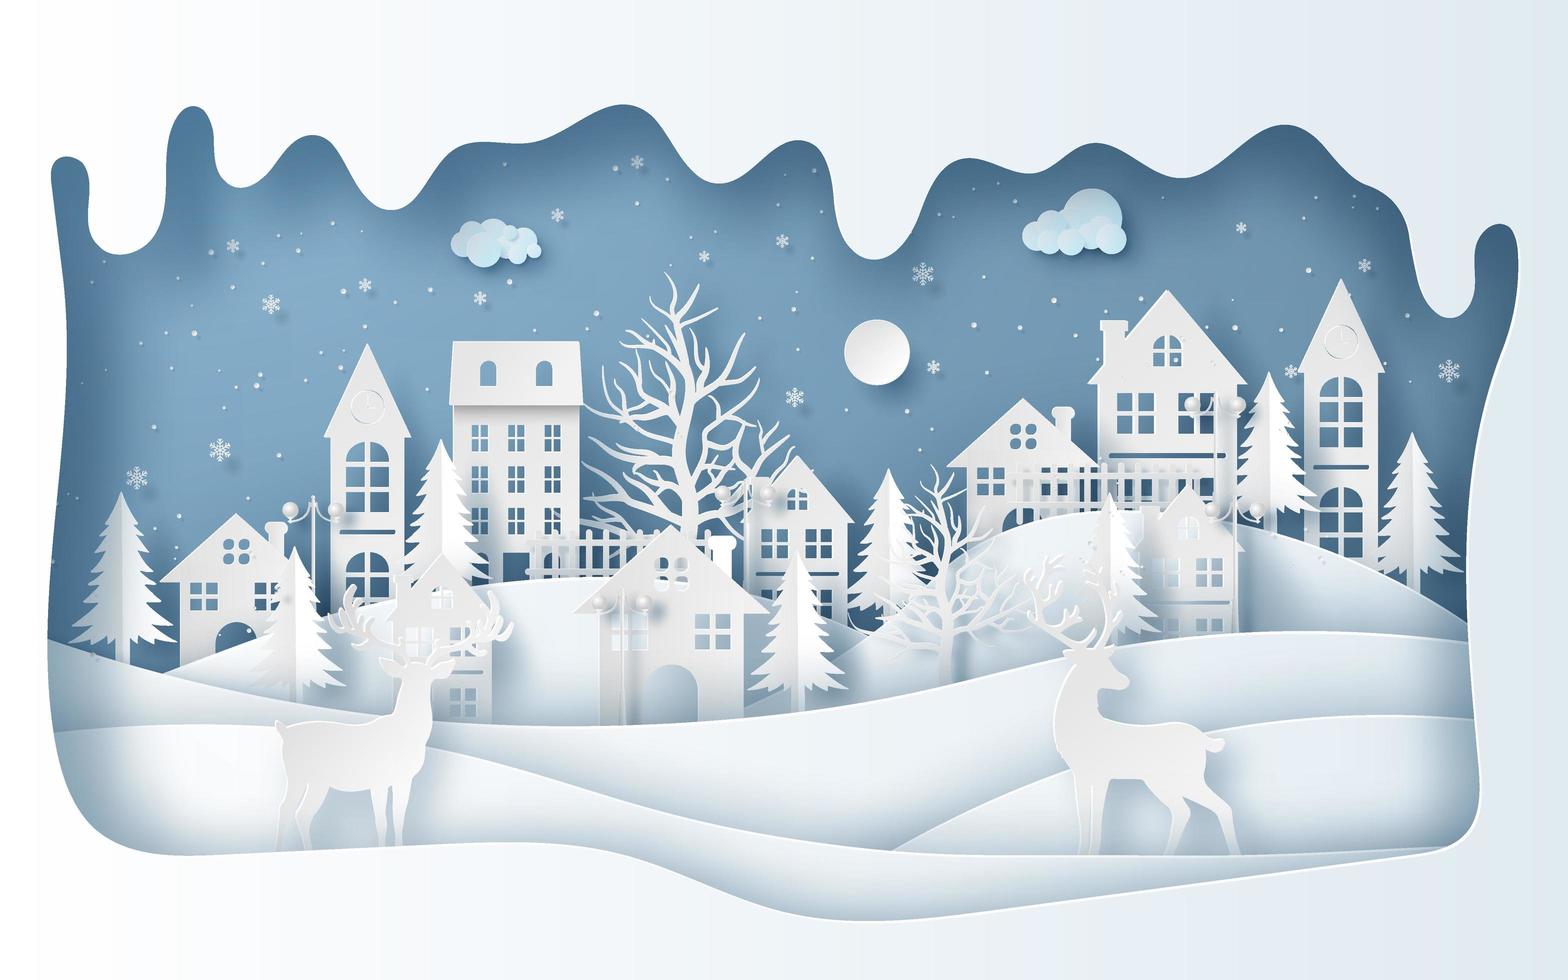 Paper art style of Reindeer in the village in winter season vector